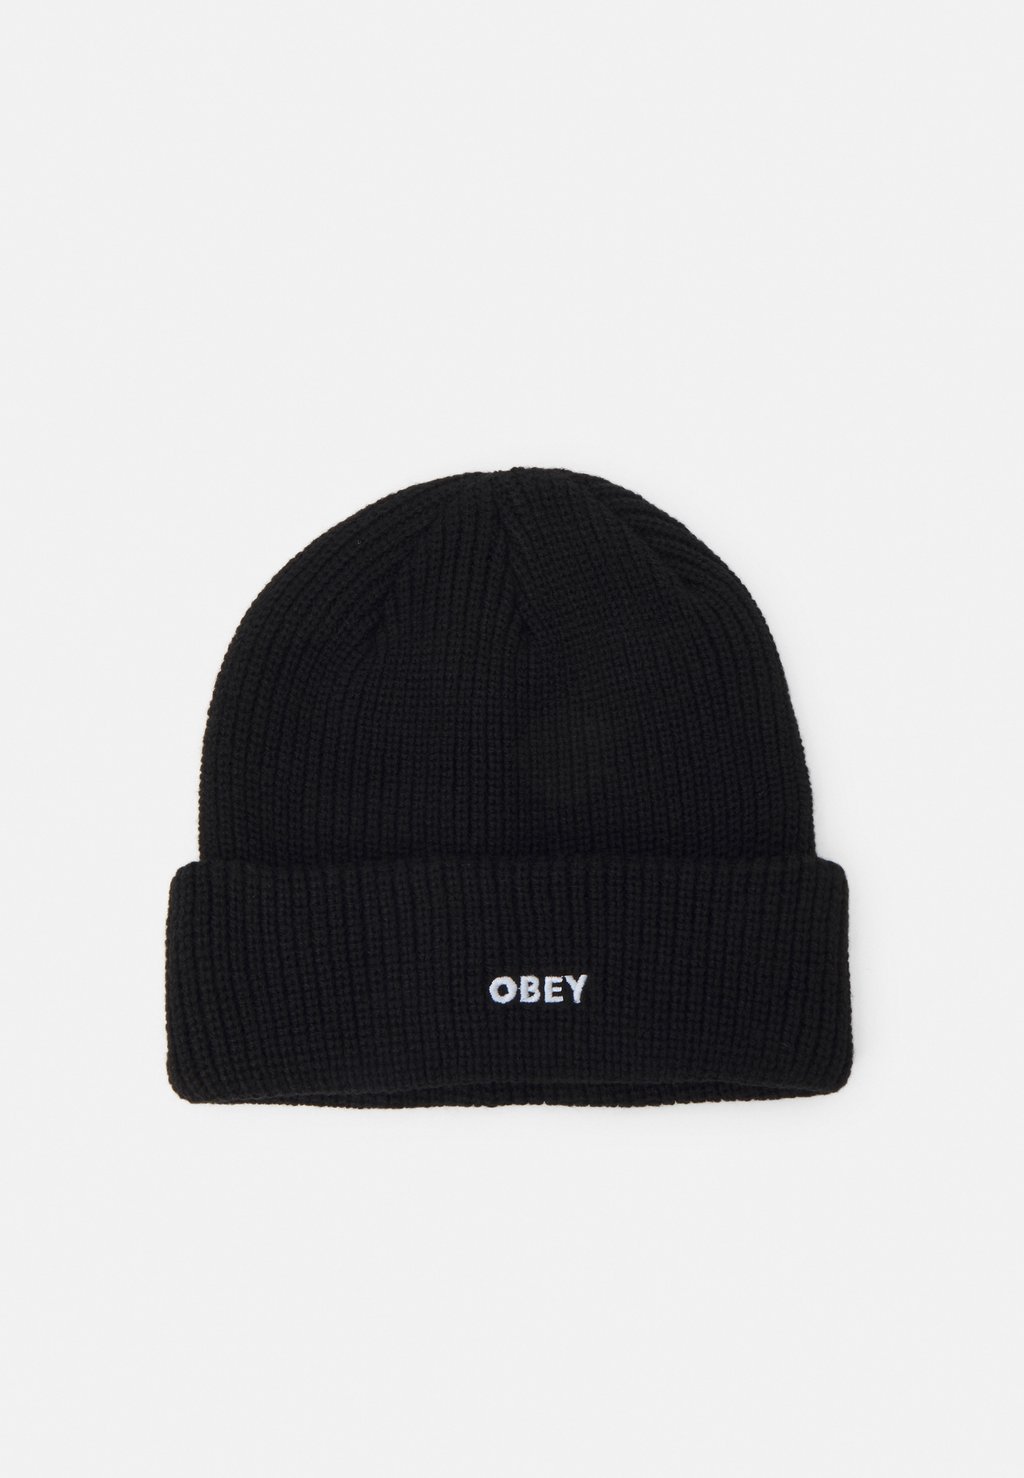 Шапка-бини ONE TWO UNISEX Obey Clothing, черный шапка gemma beanie unisex obey clothing черный